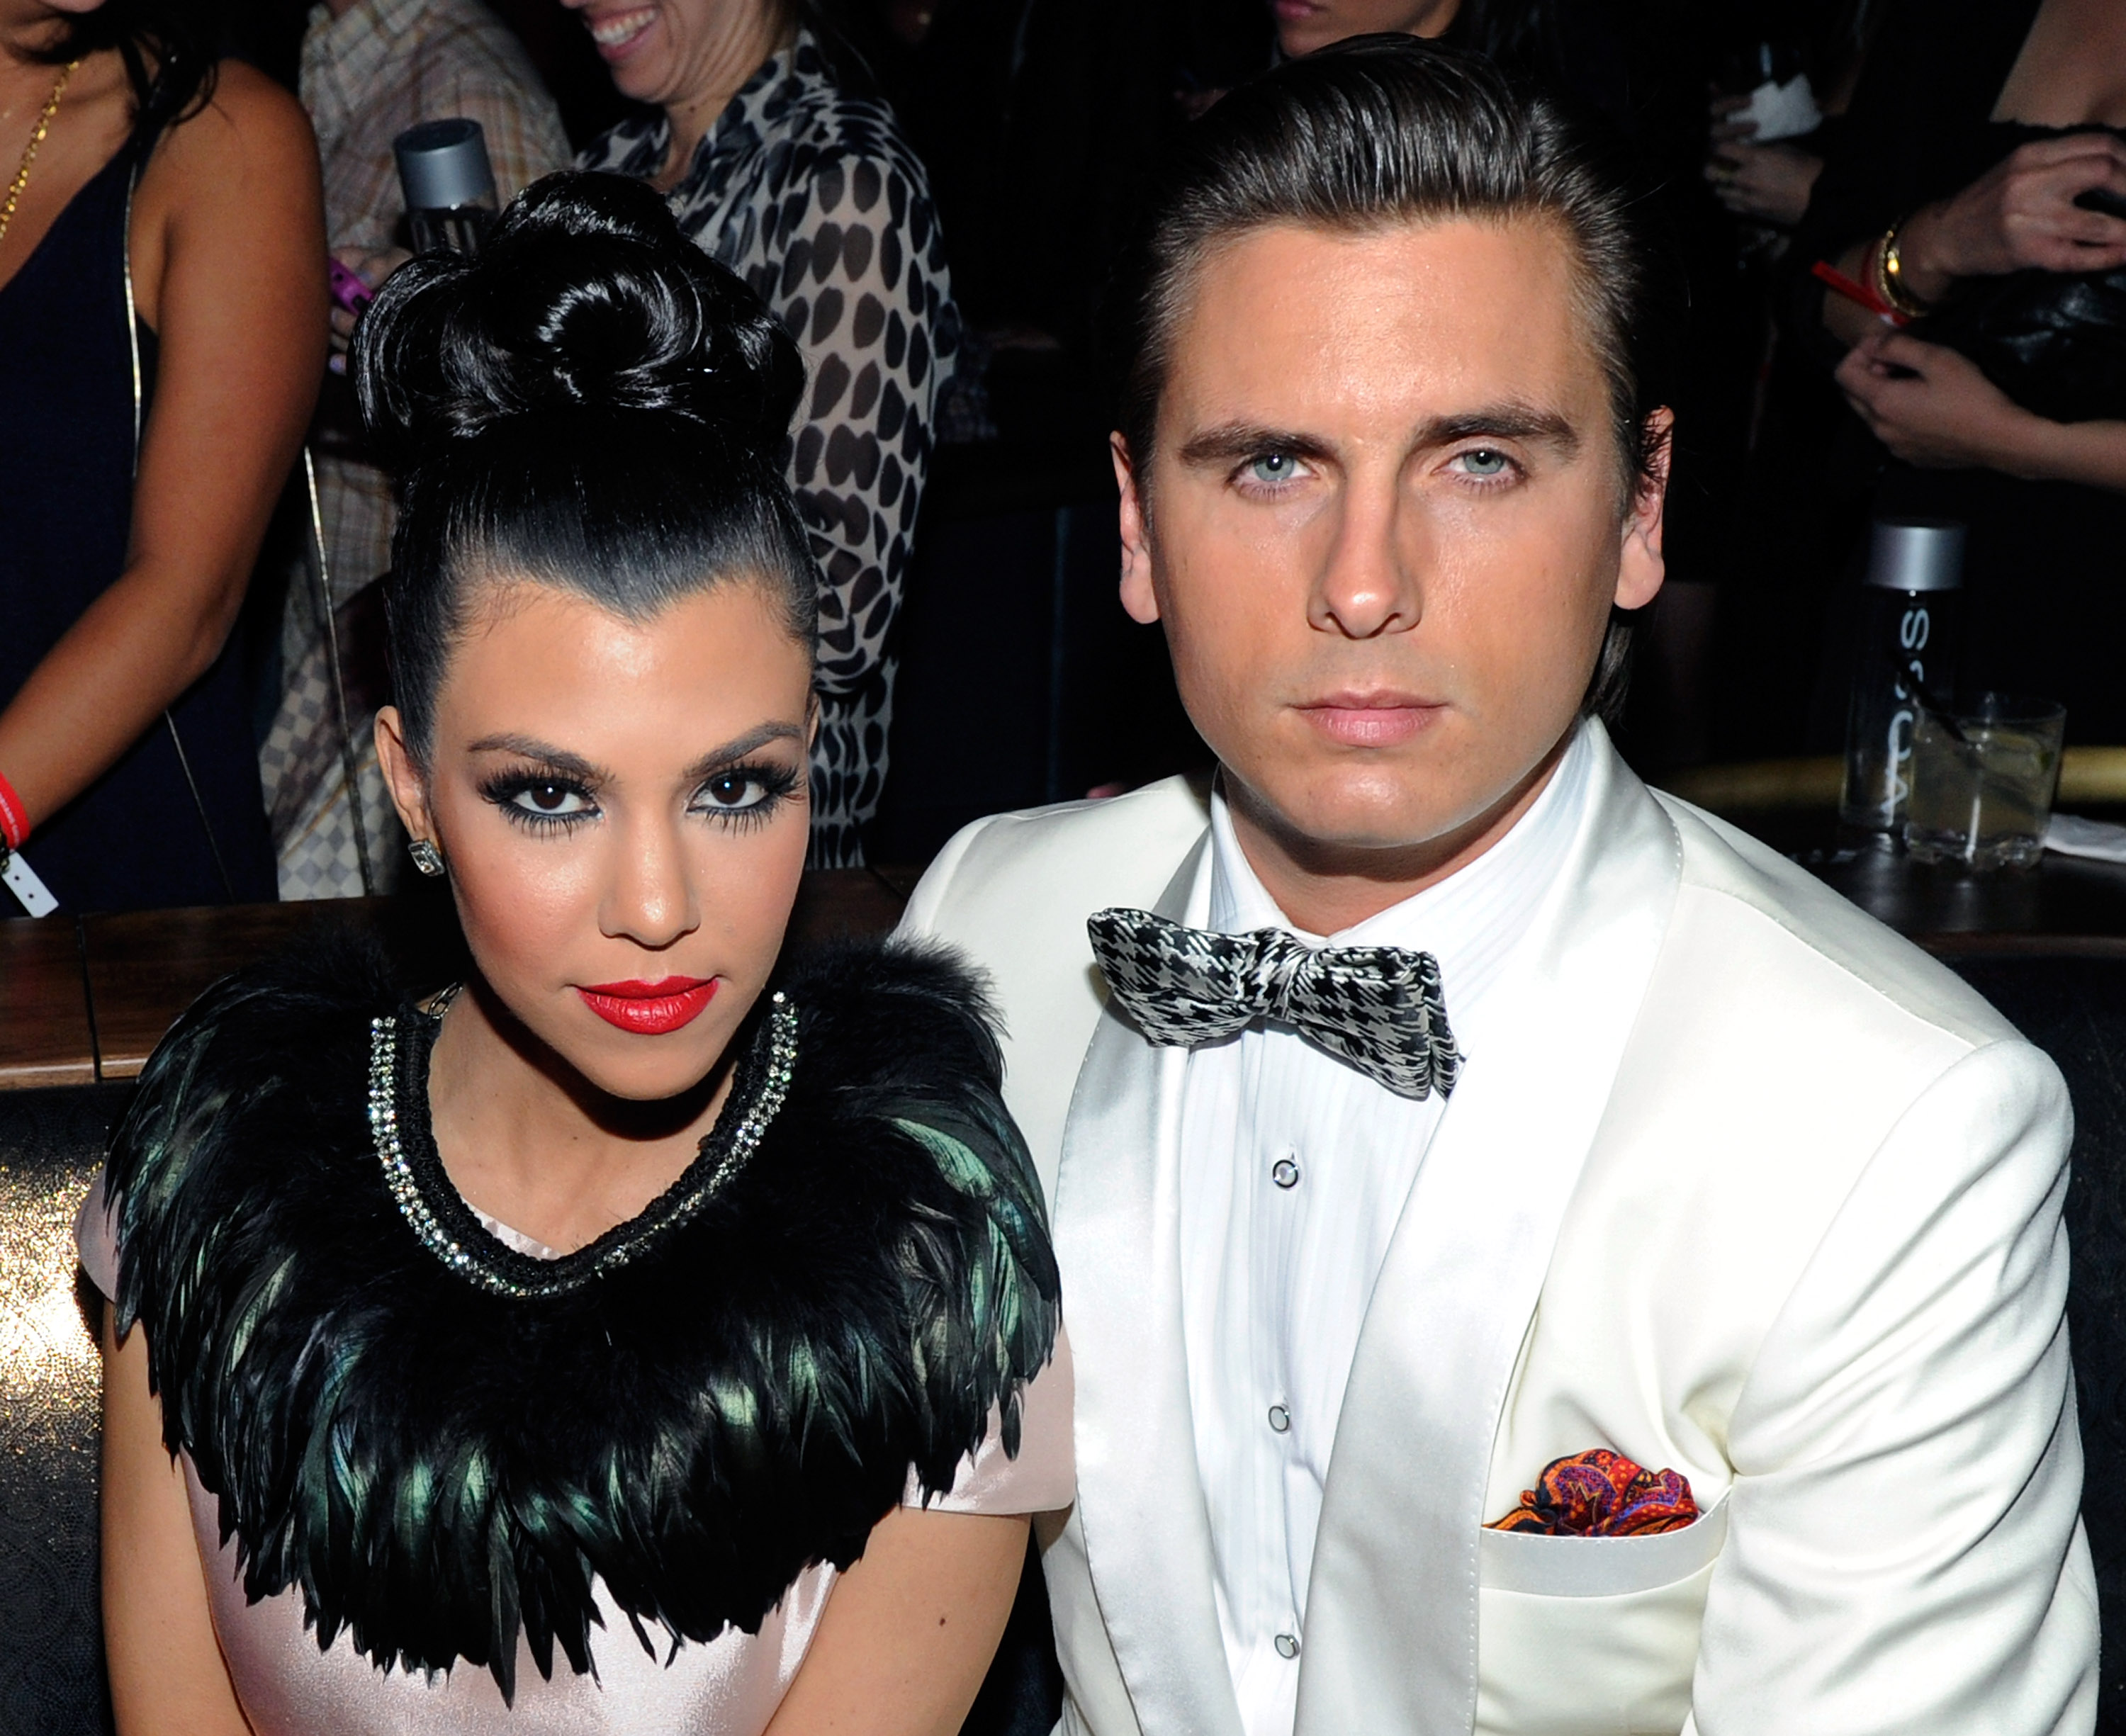 Kourtney Kardashian and Scott Disick attend the launch of 'Backstage Presents'